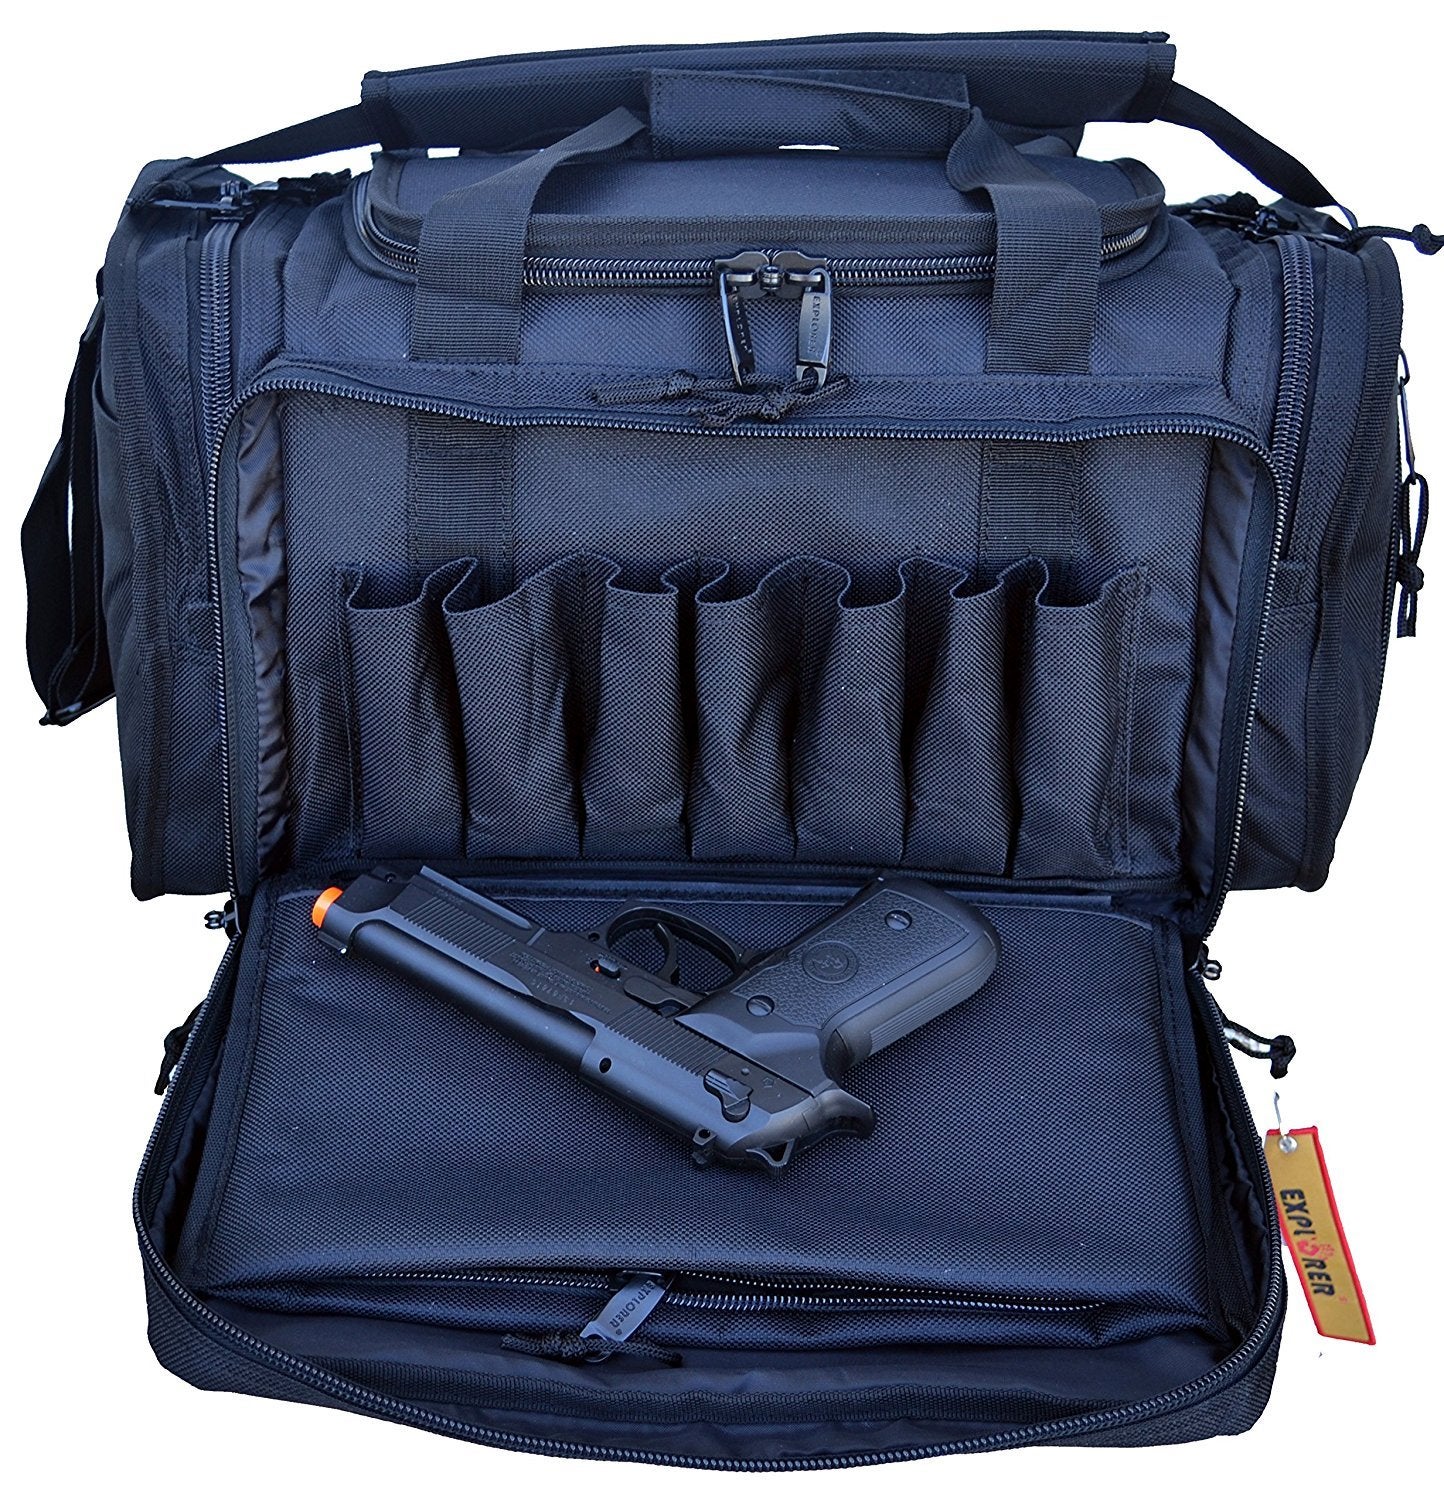 Deluxe BLACK  Field Range Bag 18 Inch  Bag Handgun Pistol Firearm Ammo Case 